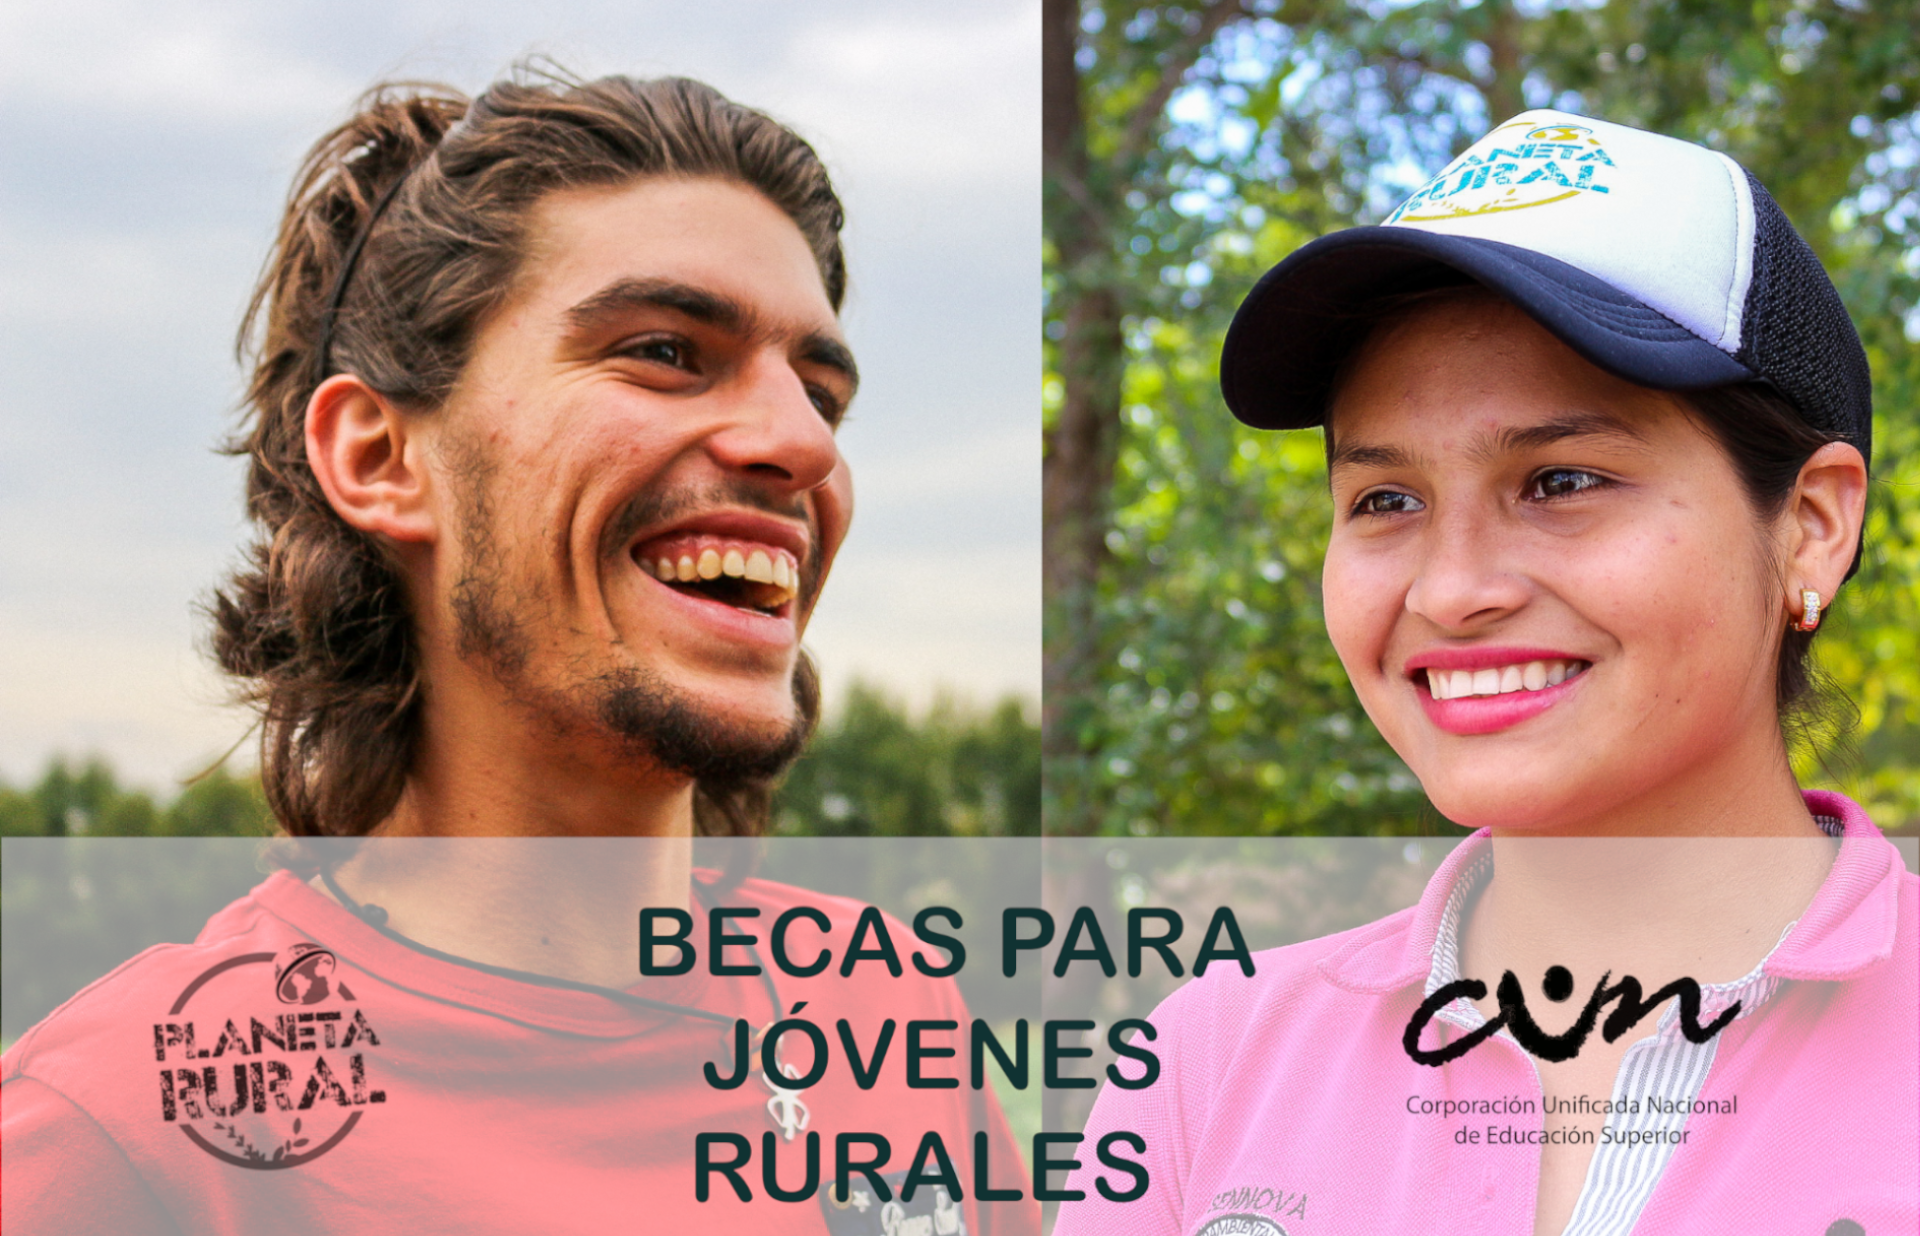 Beca CUN Jovenes Rurales - Alianza Planeta Rural